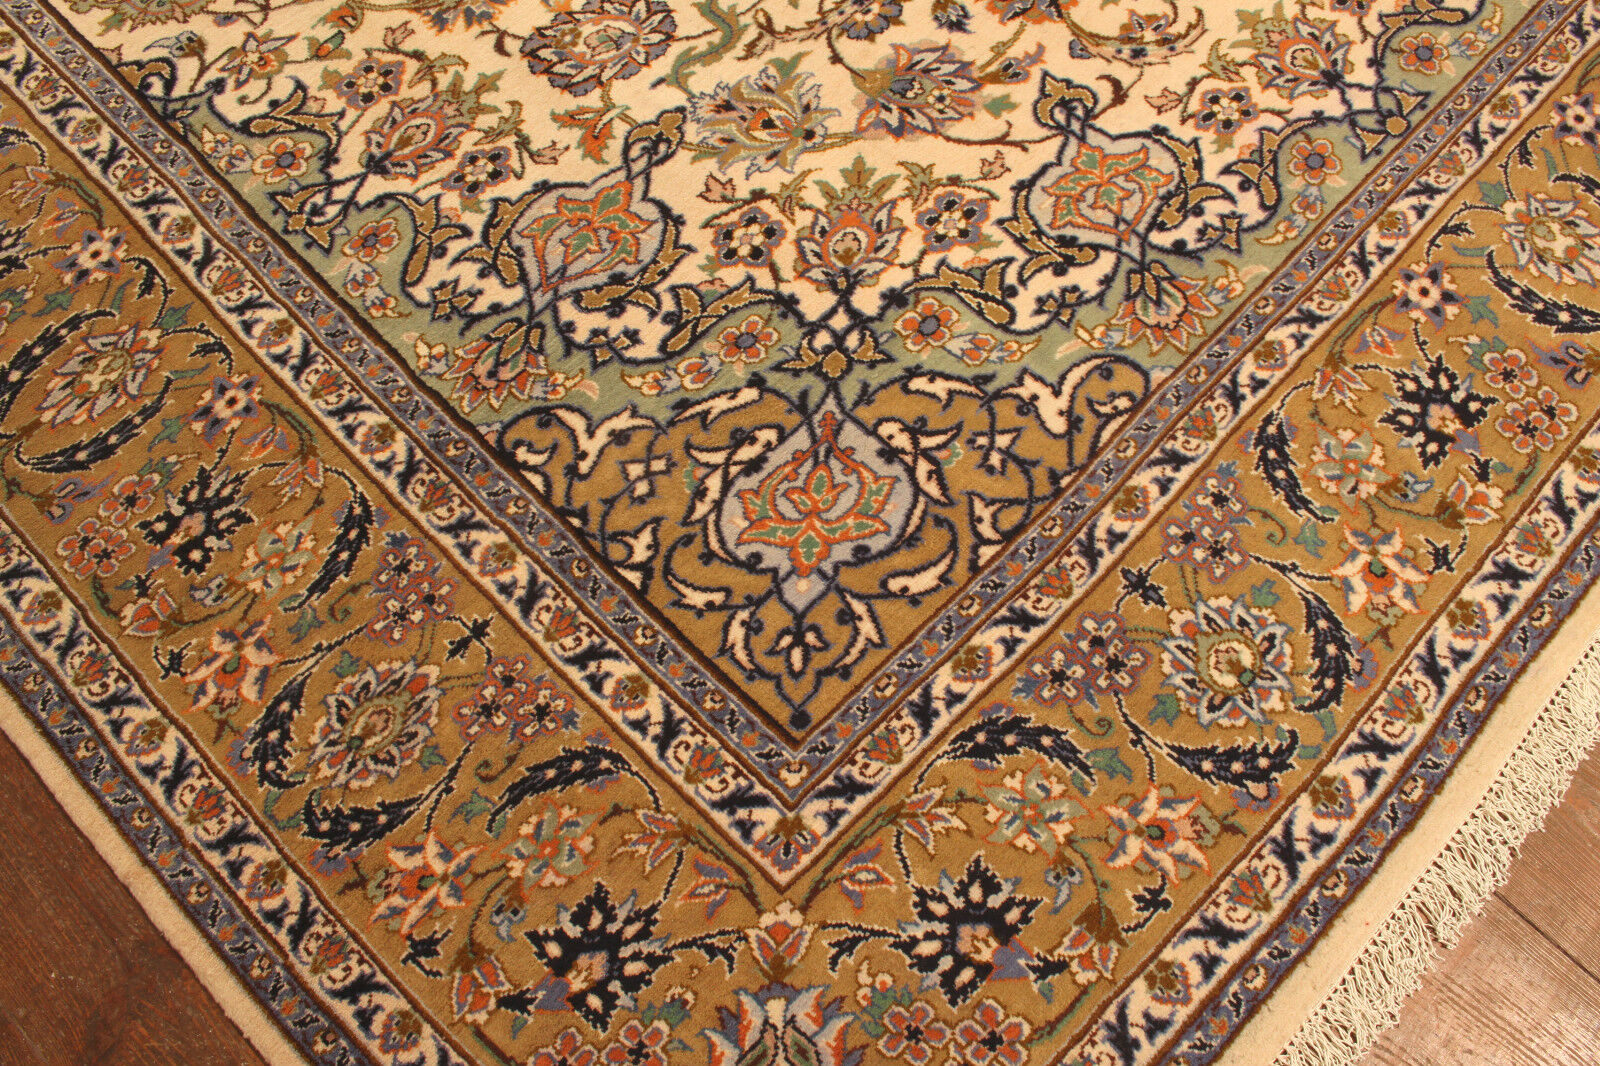 Back view of the Handmade Contemporary Persian Isfahan Rug showcasing craftsmanship